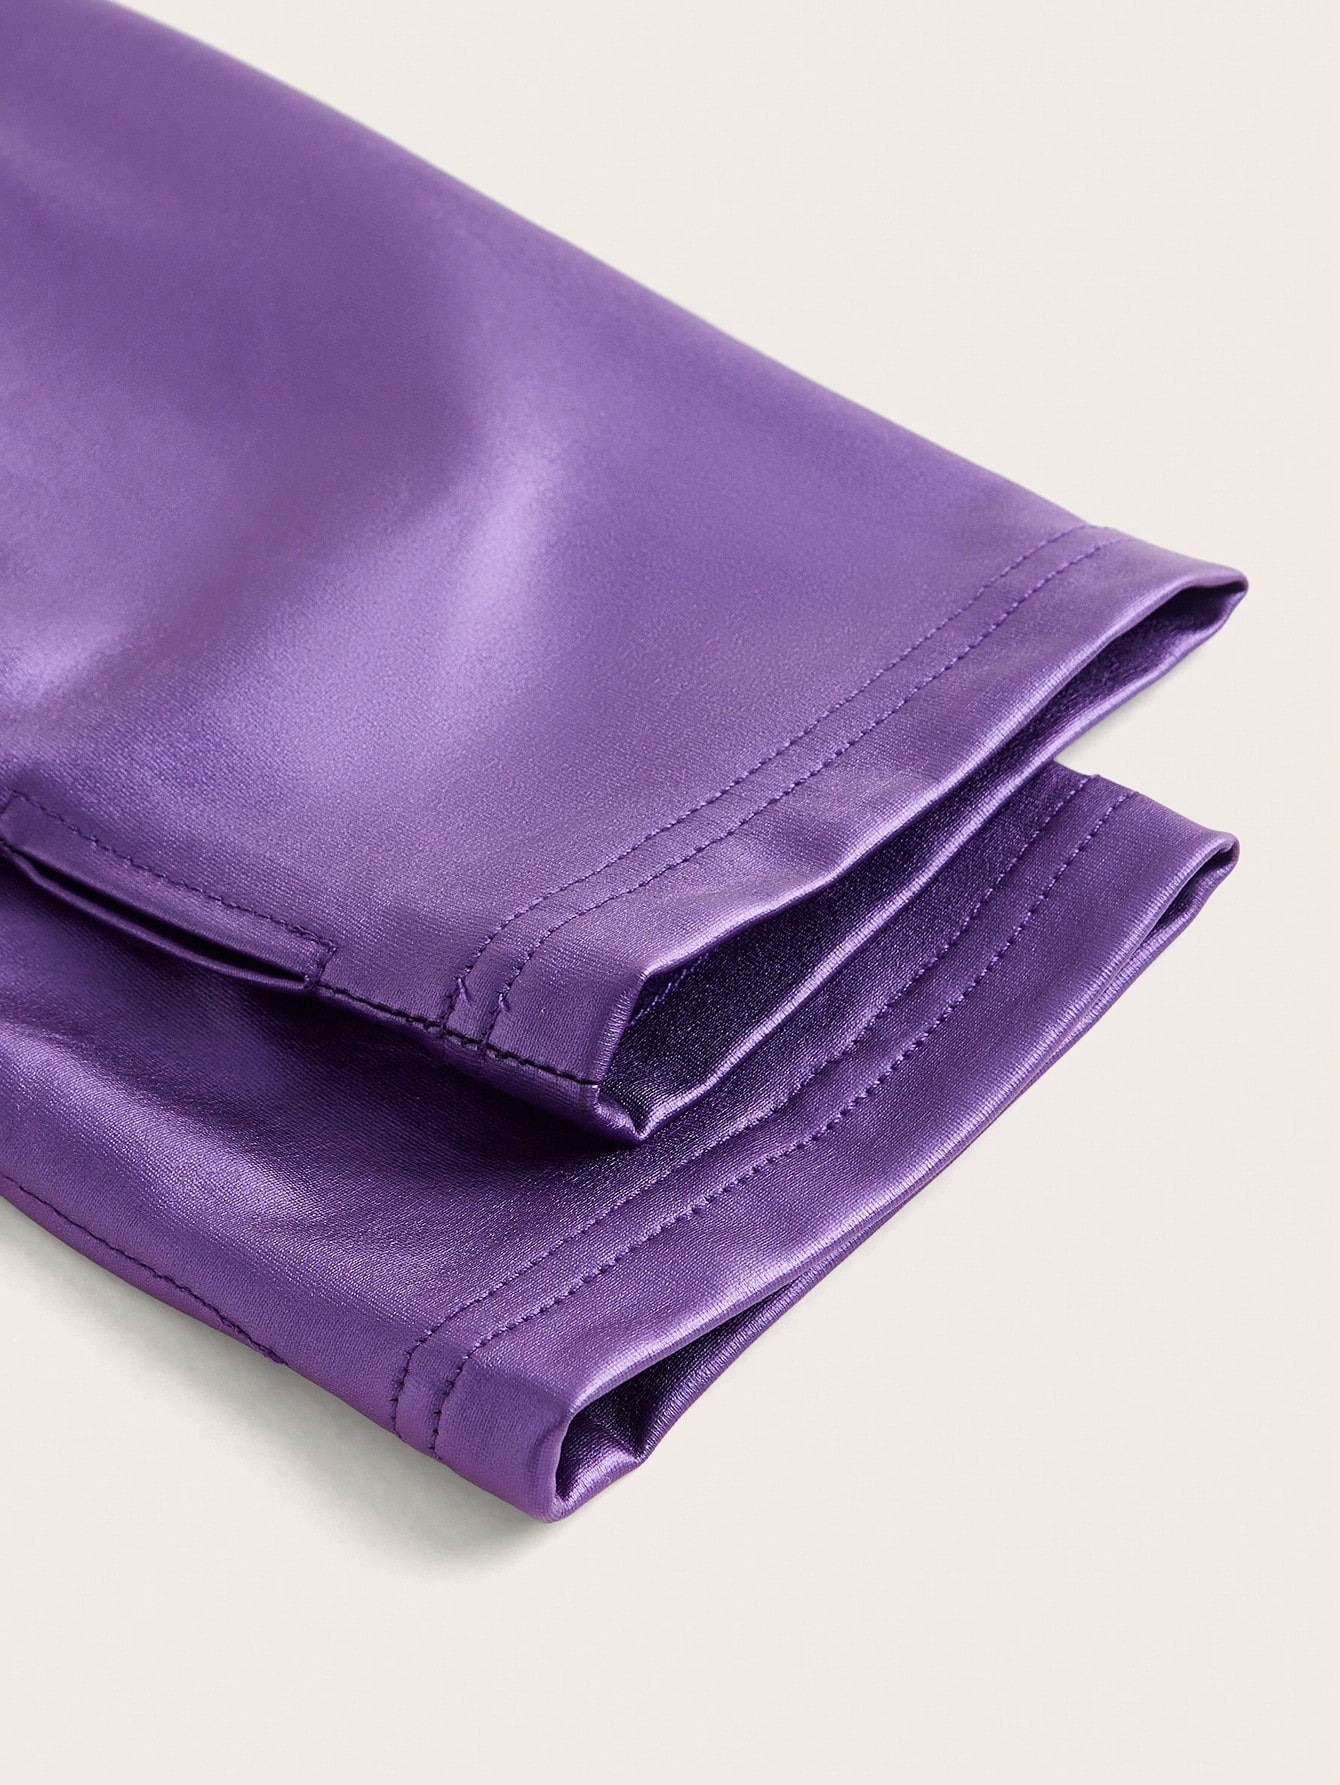 Purple metallic jacket zoom on textile